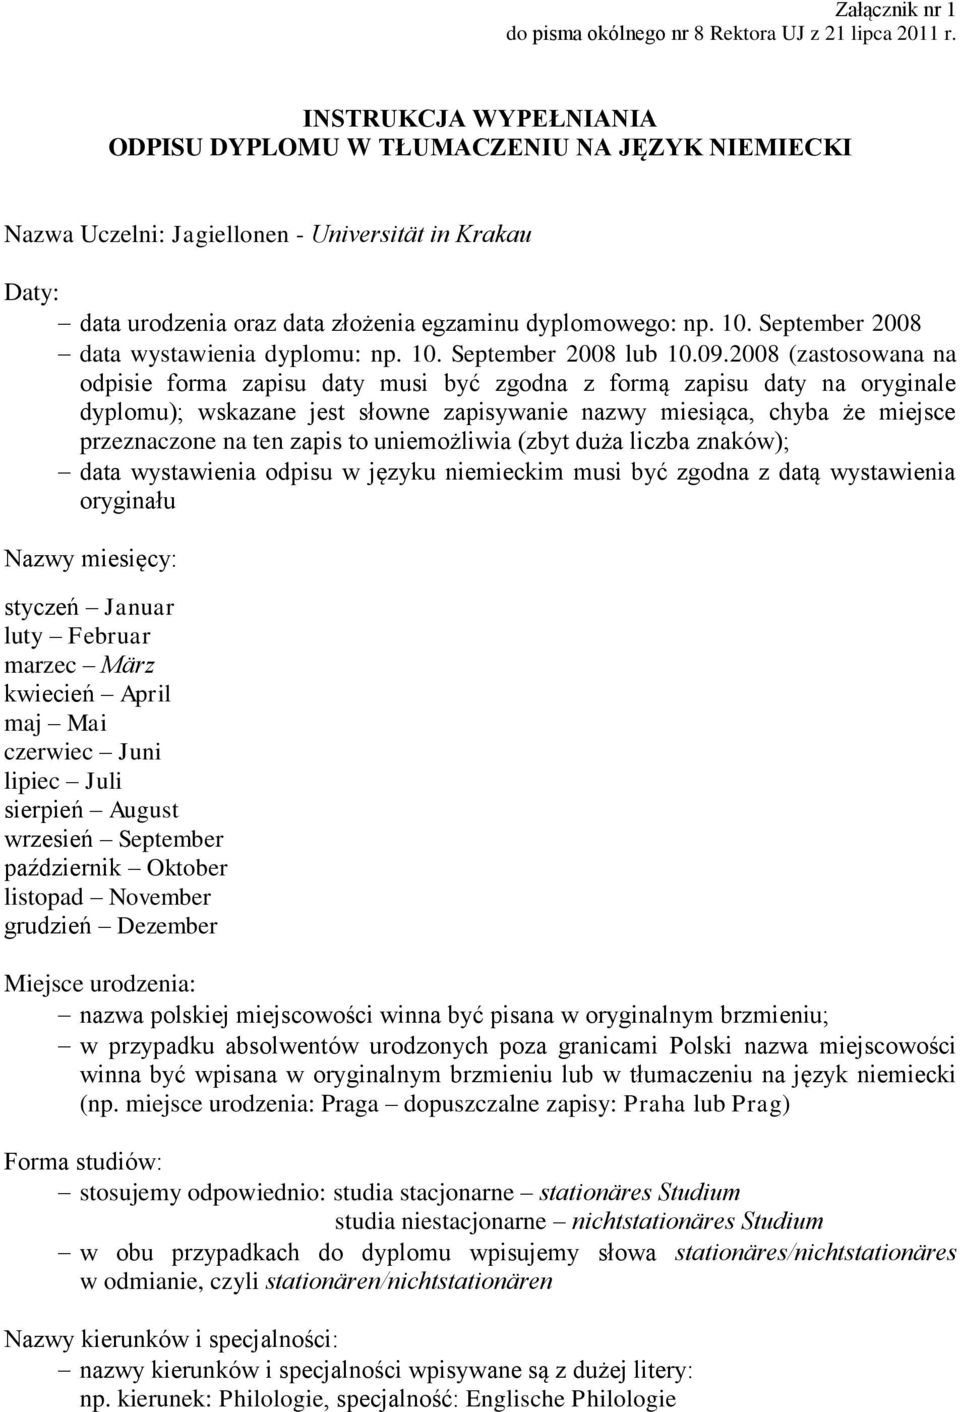 September 2008 data wystawienia dyplomu: np. 10. September 2008 lub 10.09.